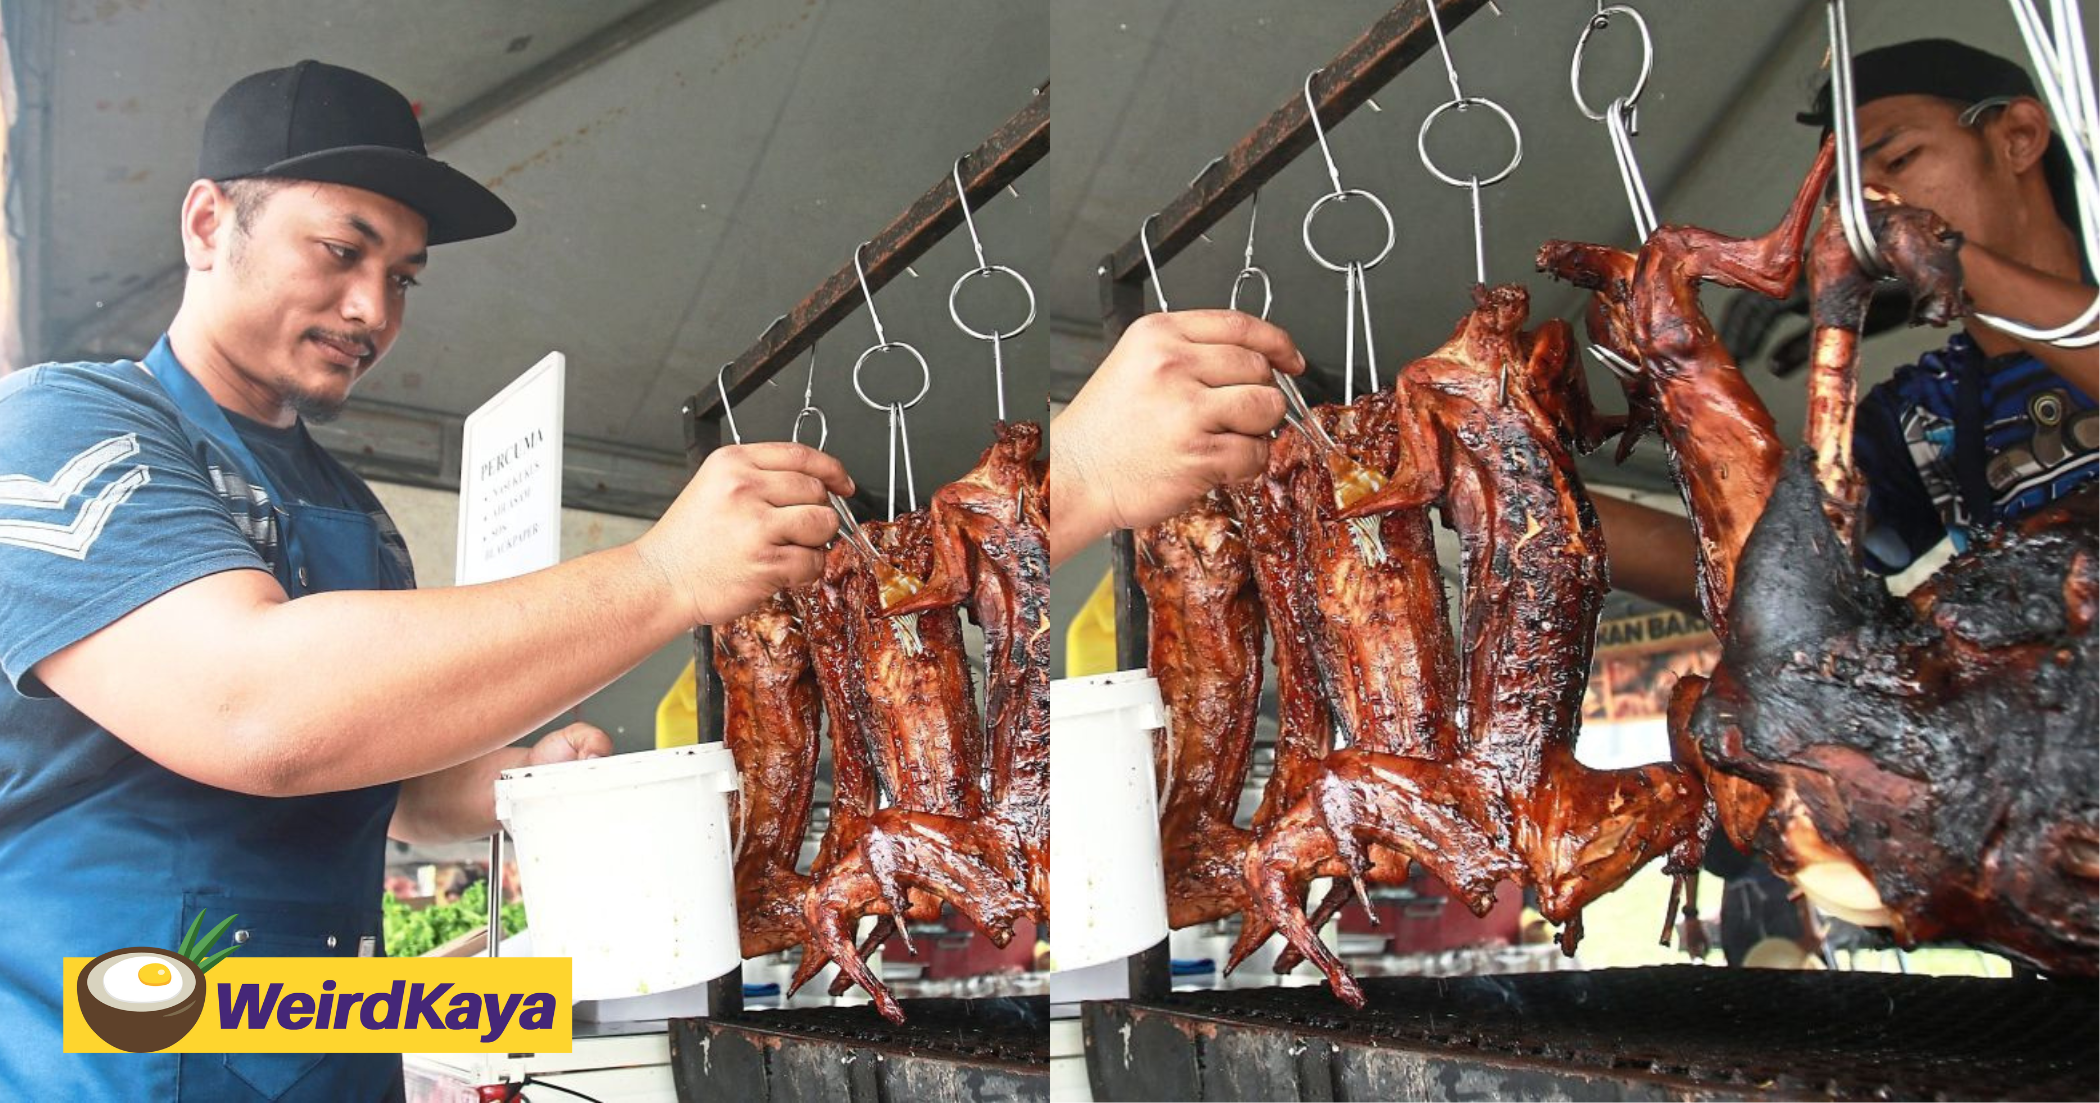 M'sian vendor sells grilled rabbit at ramadan bazaar, attracts many customers | weirdkaya